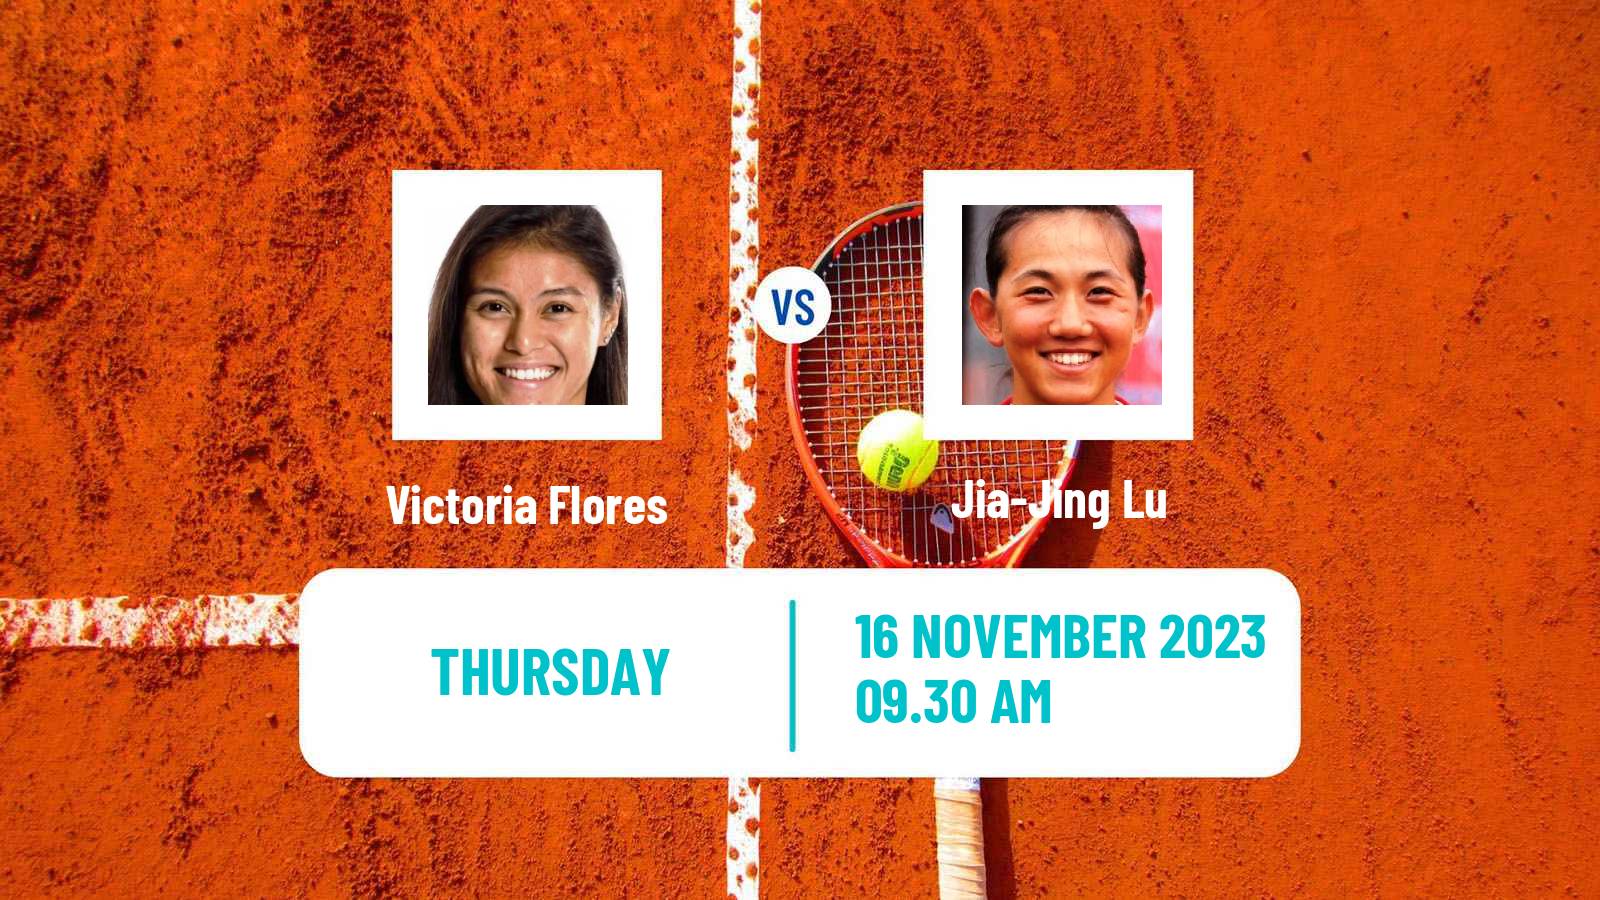 Tennis ITF W25 Santo Domingo 6 Women Victoria Flores - Jia-Jing Lu